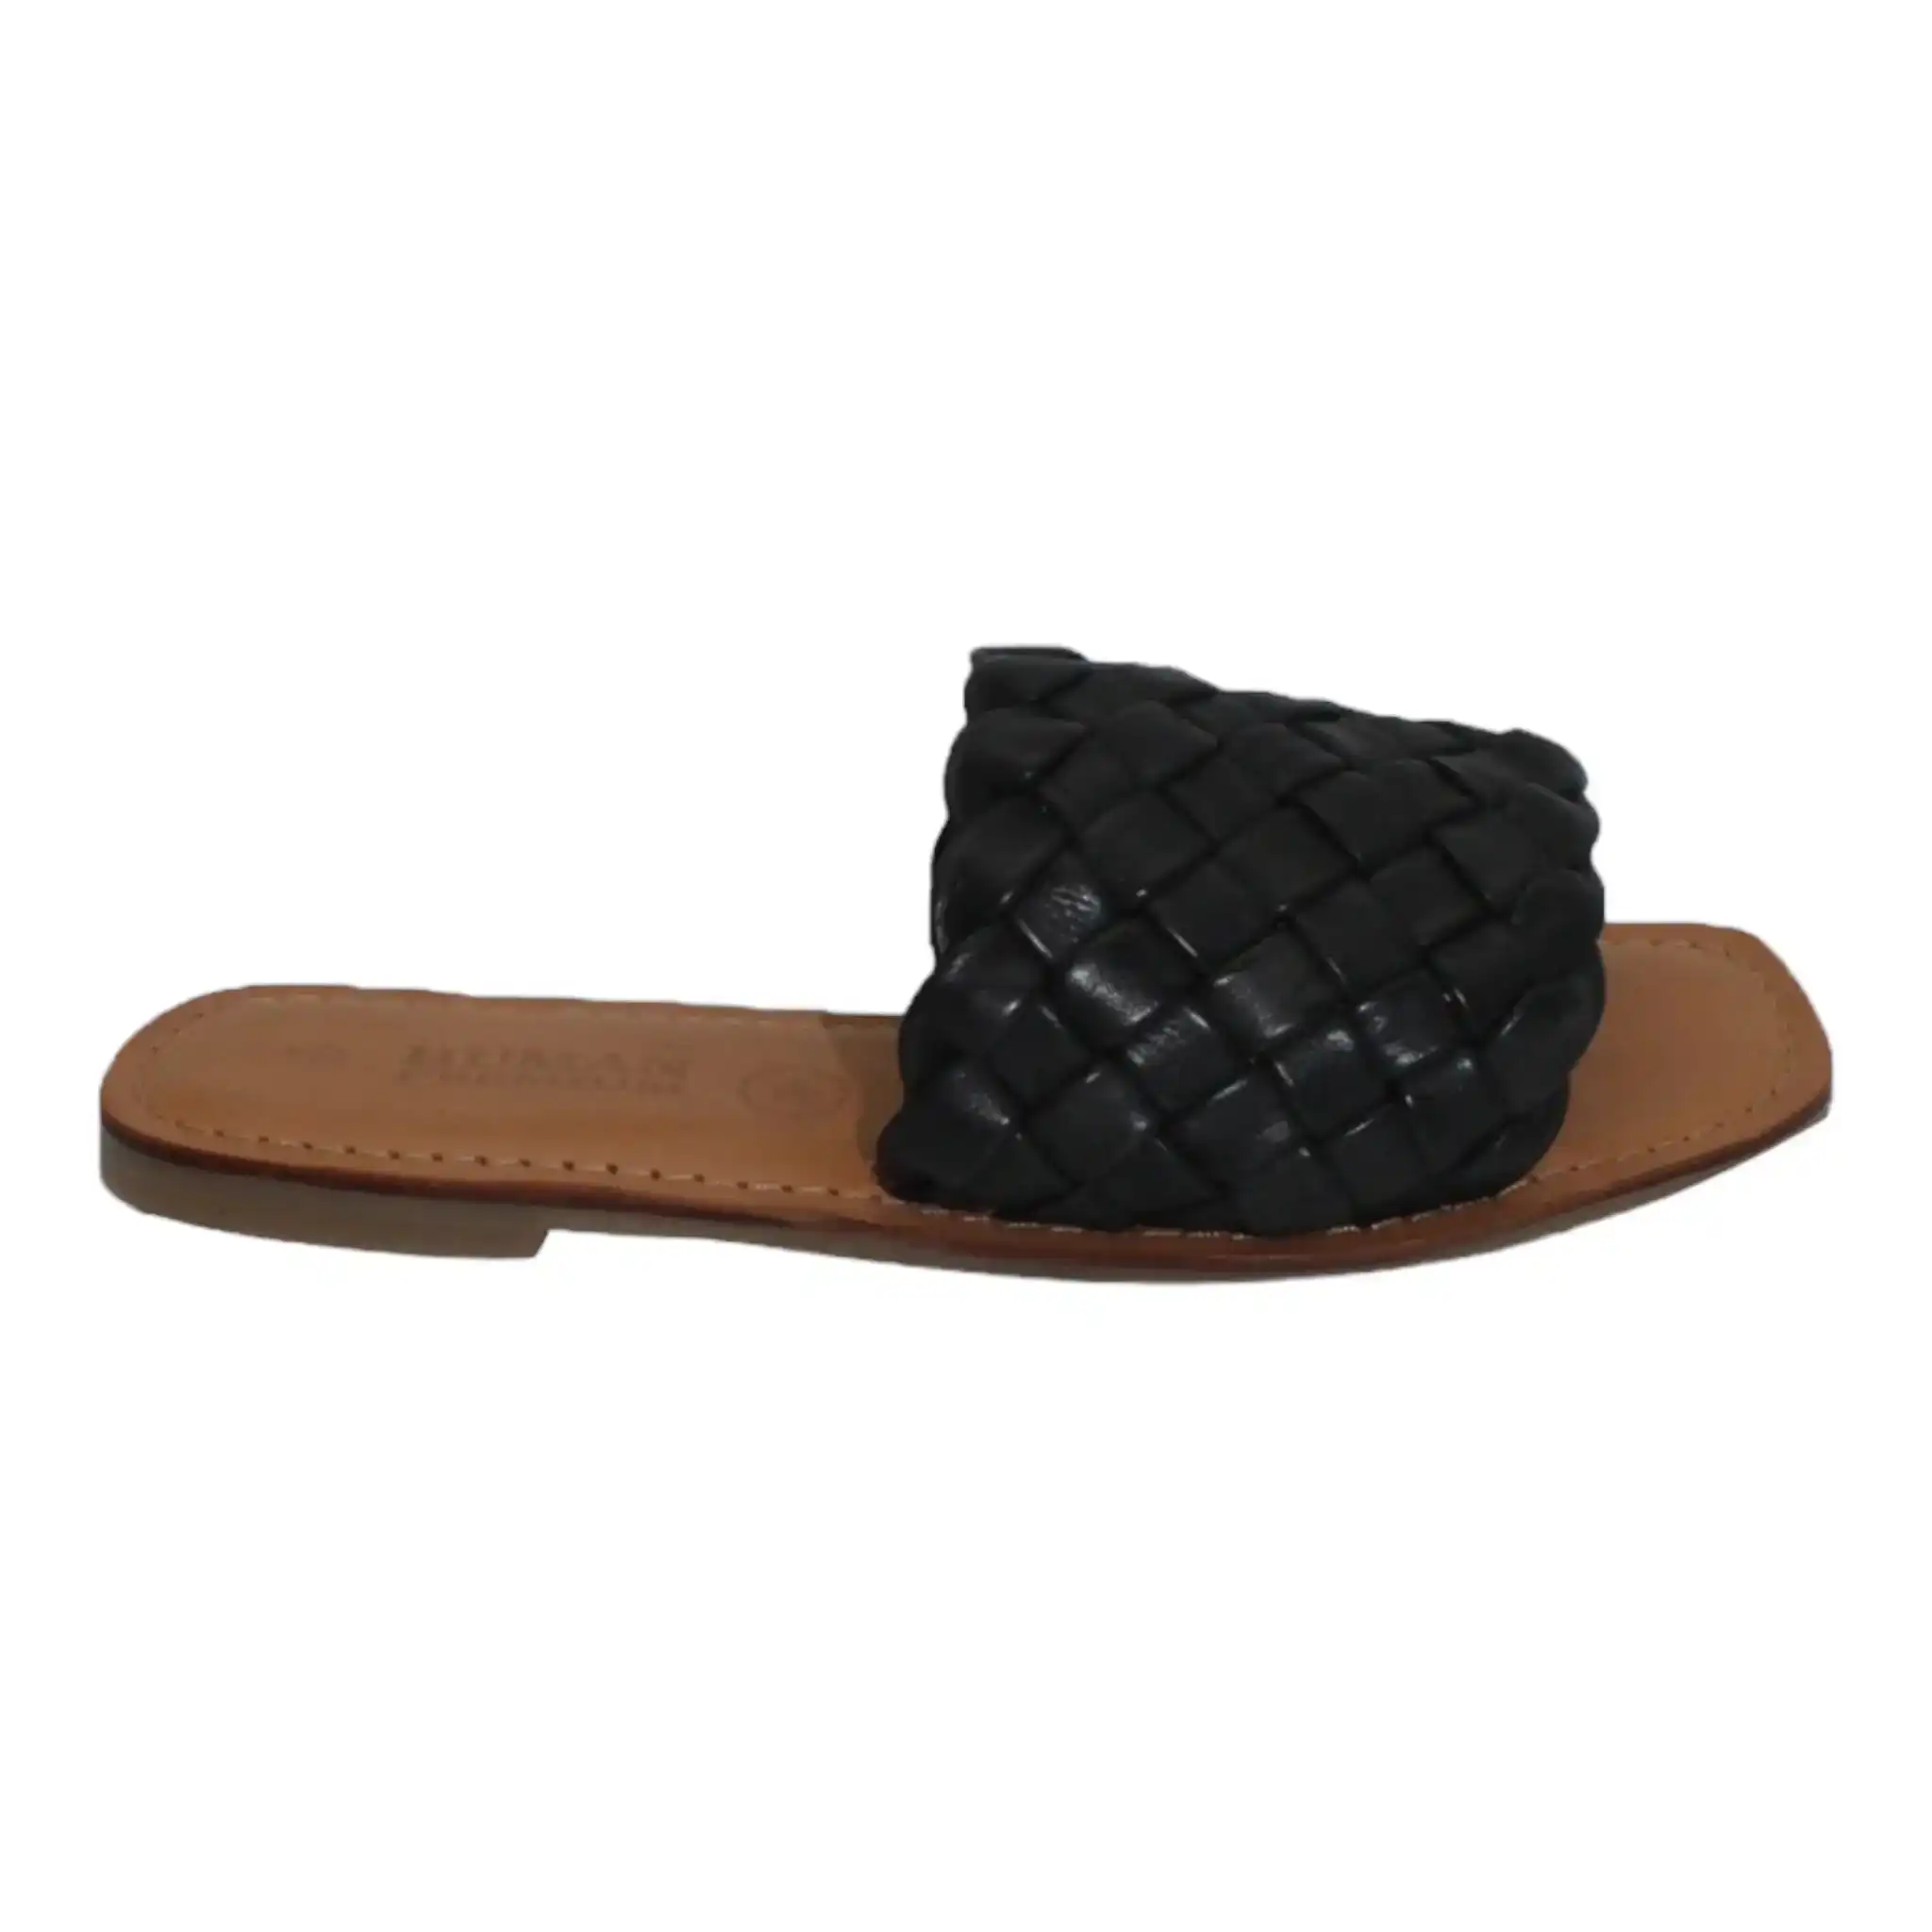 Avalon Woven Leather Sandal Black